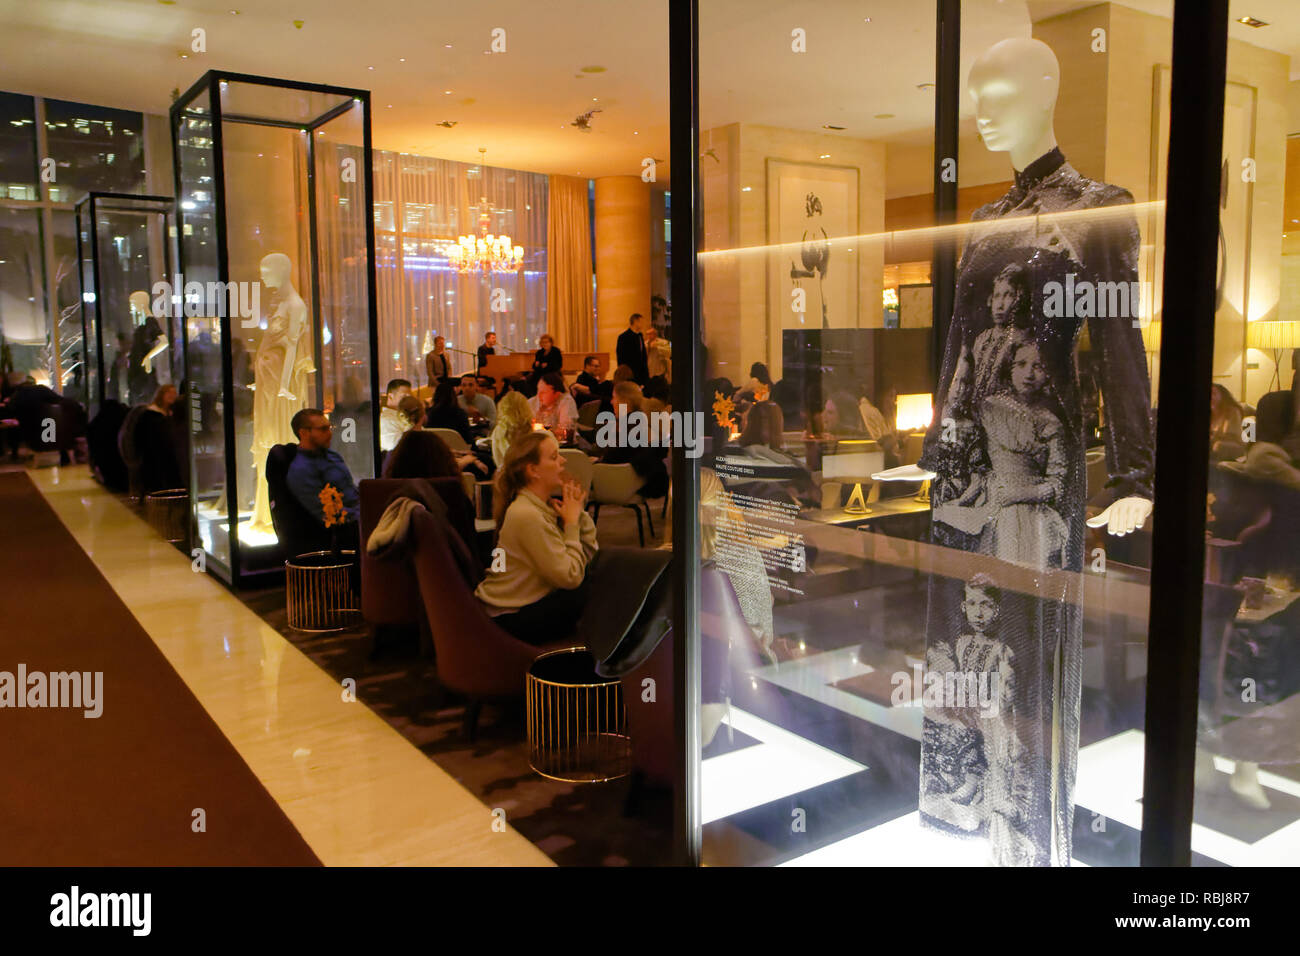 Alexander McQueen store editorial stock photo. Image of shop - 174424153